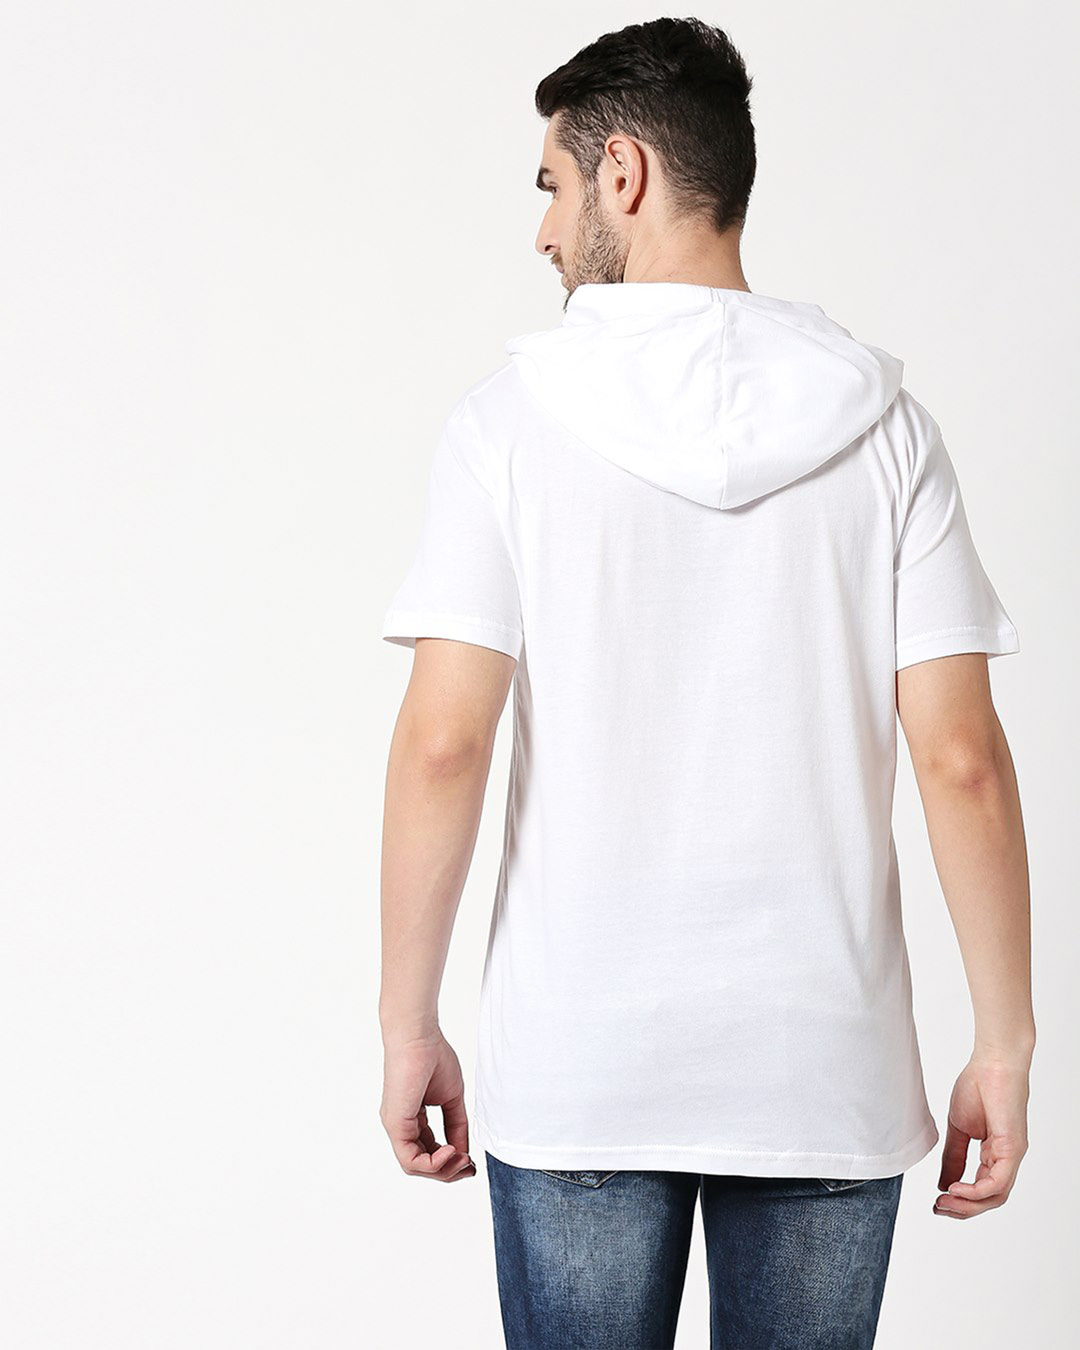 Shop Peace Jerry Half Sleeve Hoodie T-Shirt (TJL) White-Back